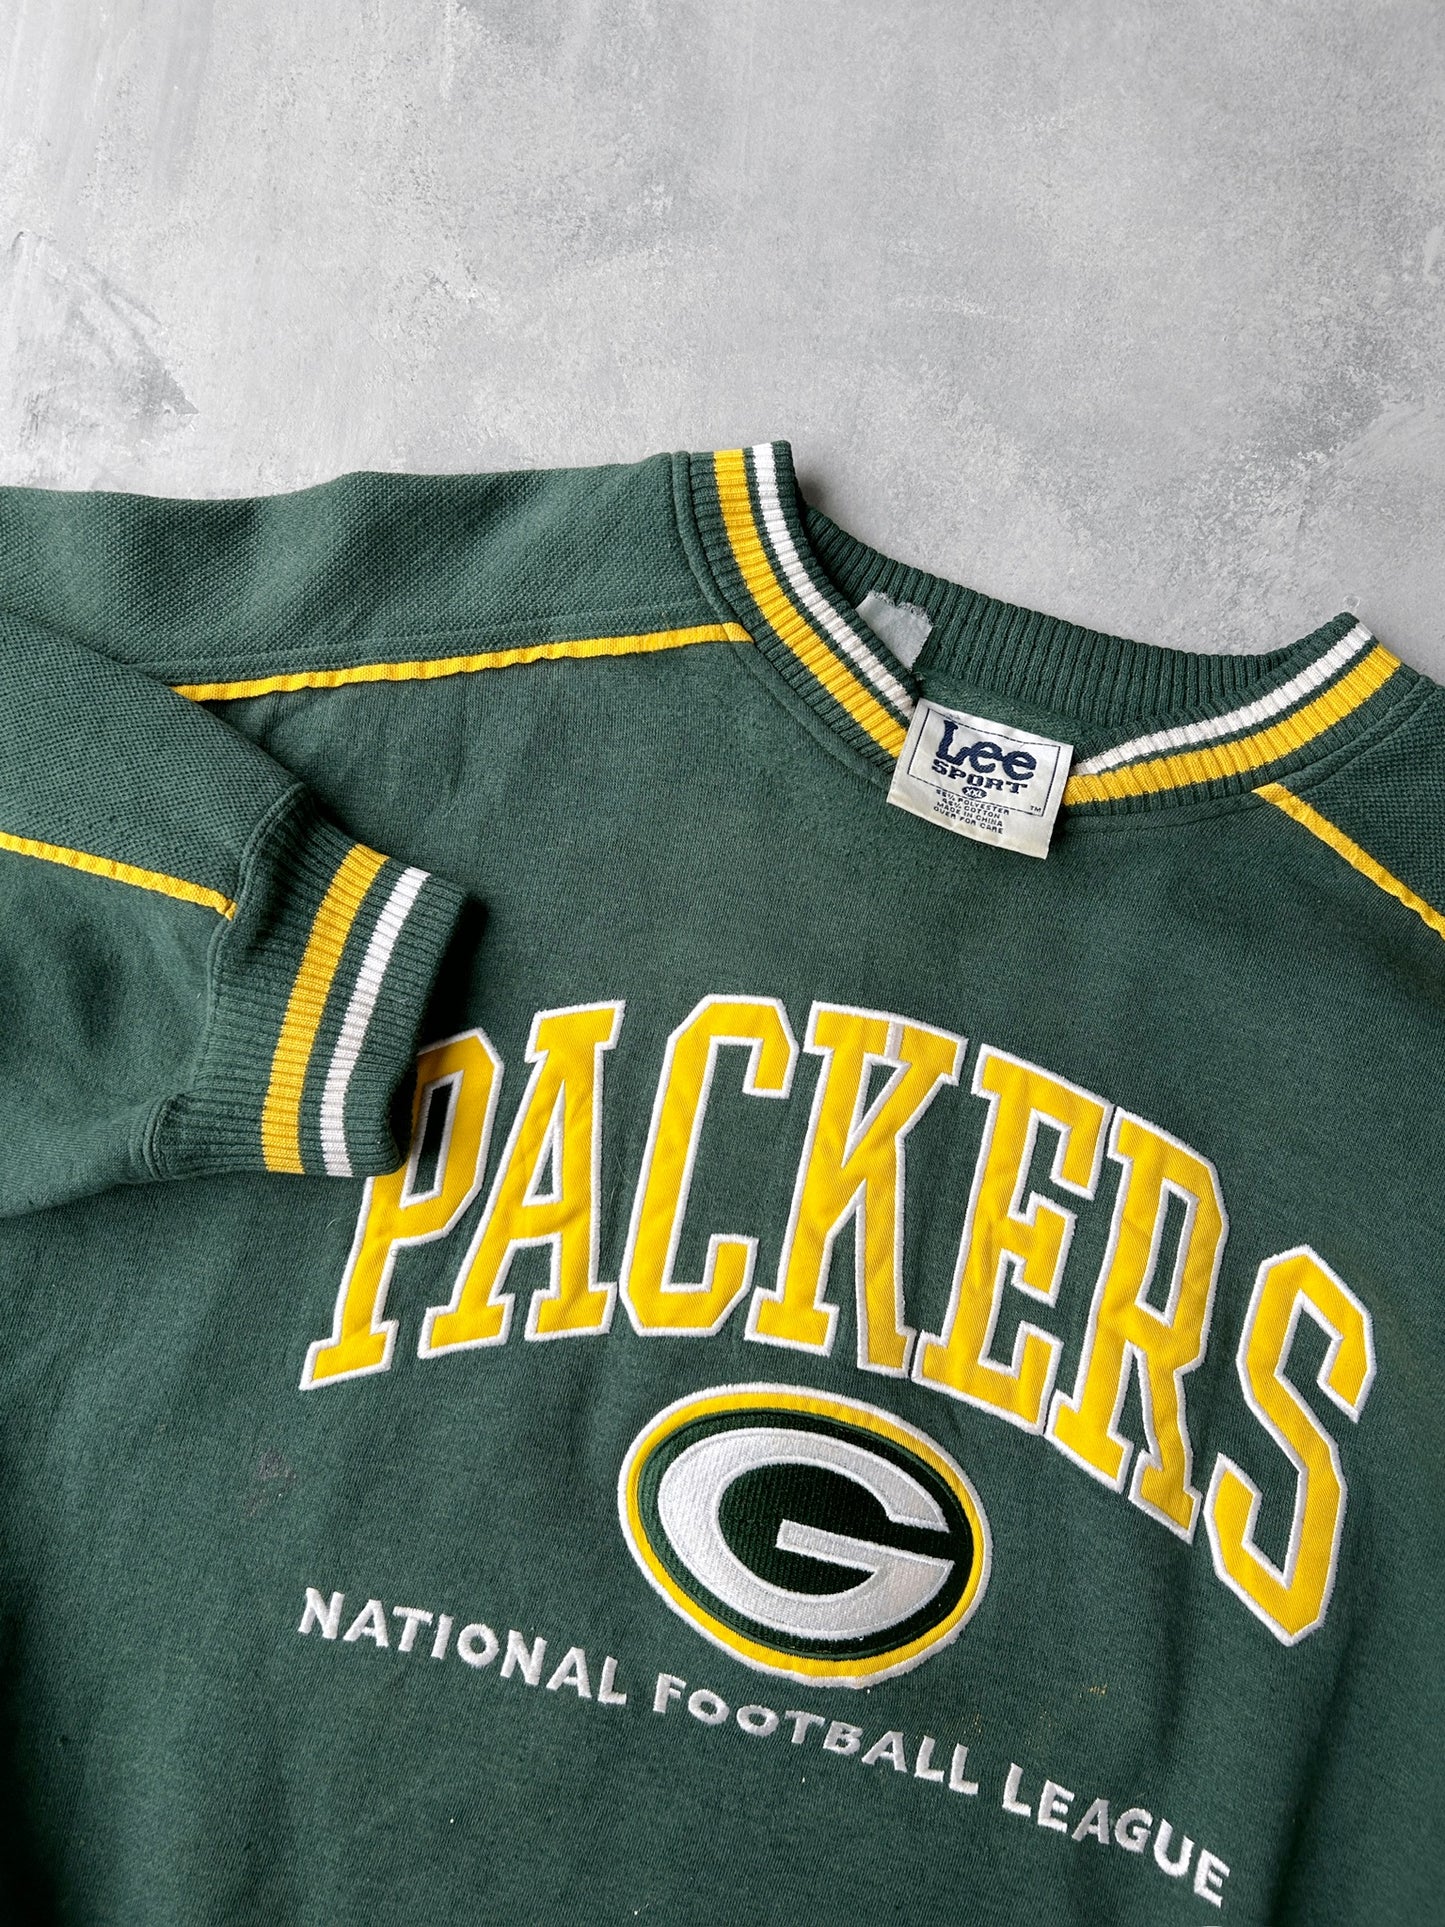 Green Bay Packers Sweatshirt 90's - XXL